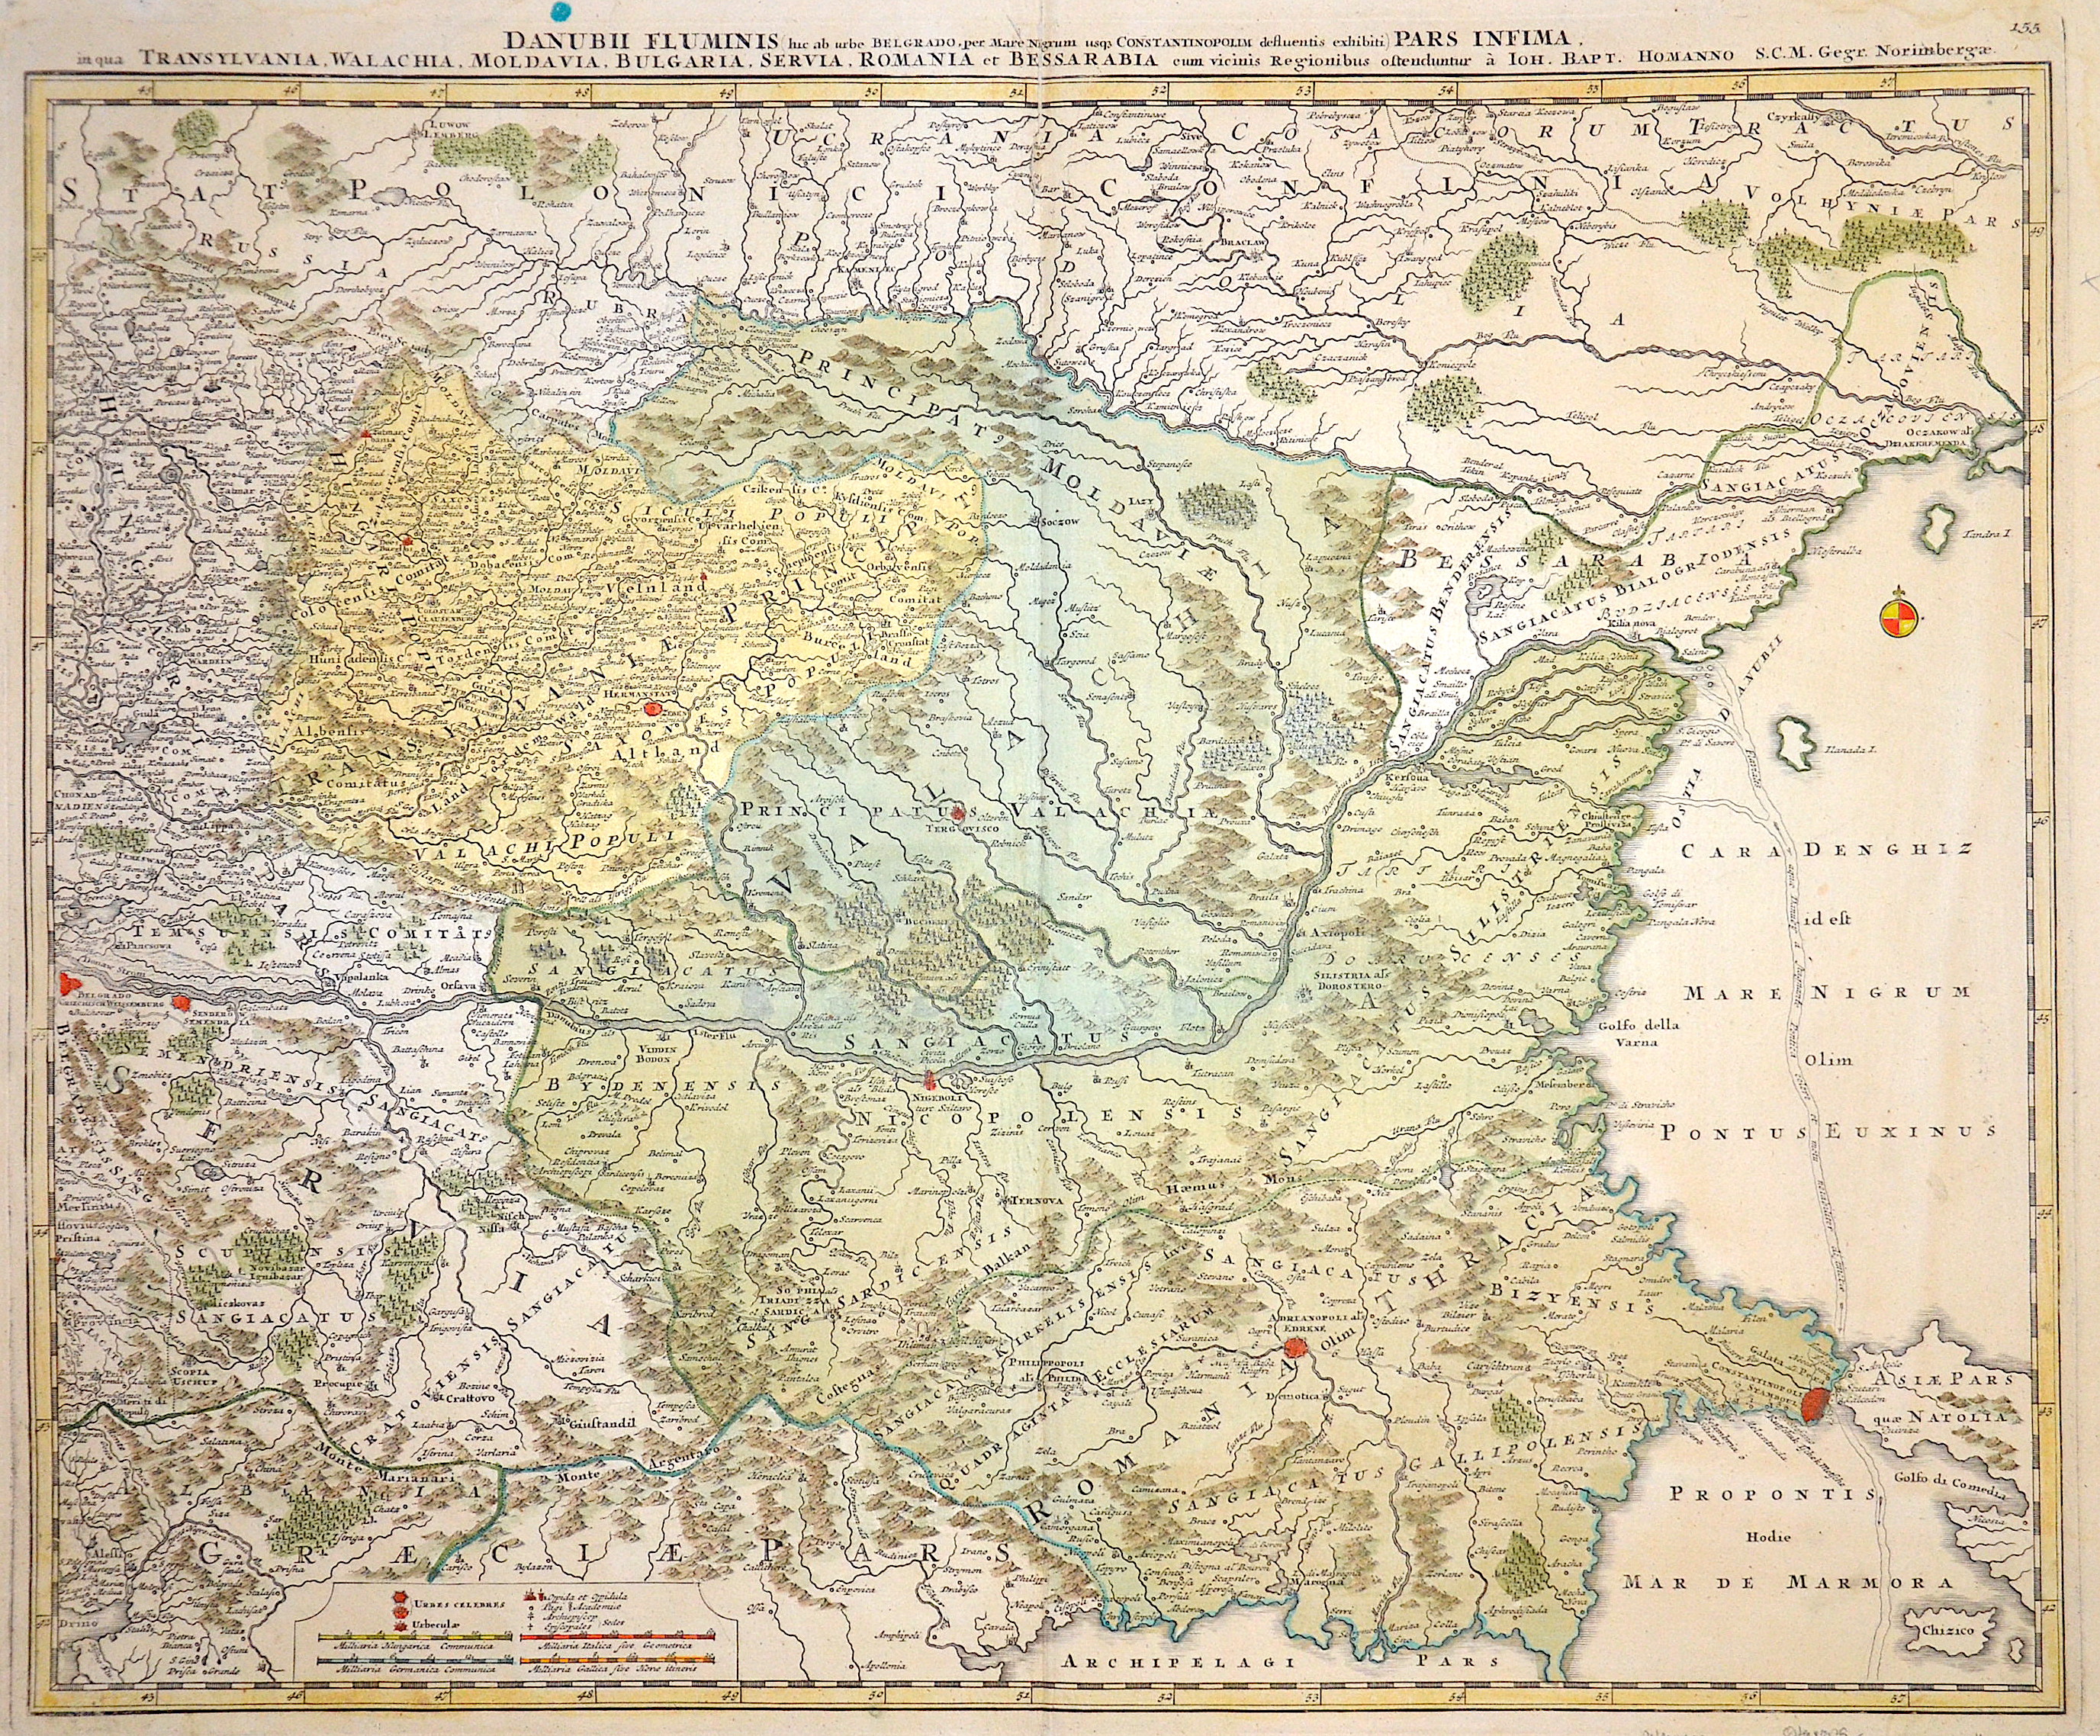 Homann  Danubii Fluminis pars infima, in qua Transyvania, Wallachia, Moldavia, Bulgari, Servia, Romania et Bessarabia